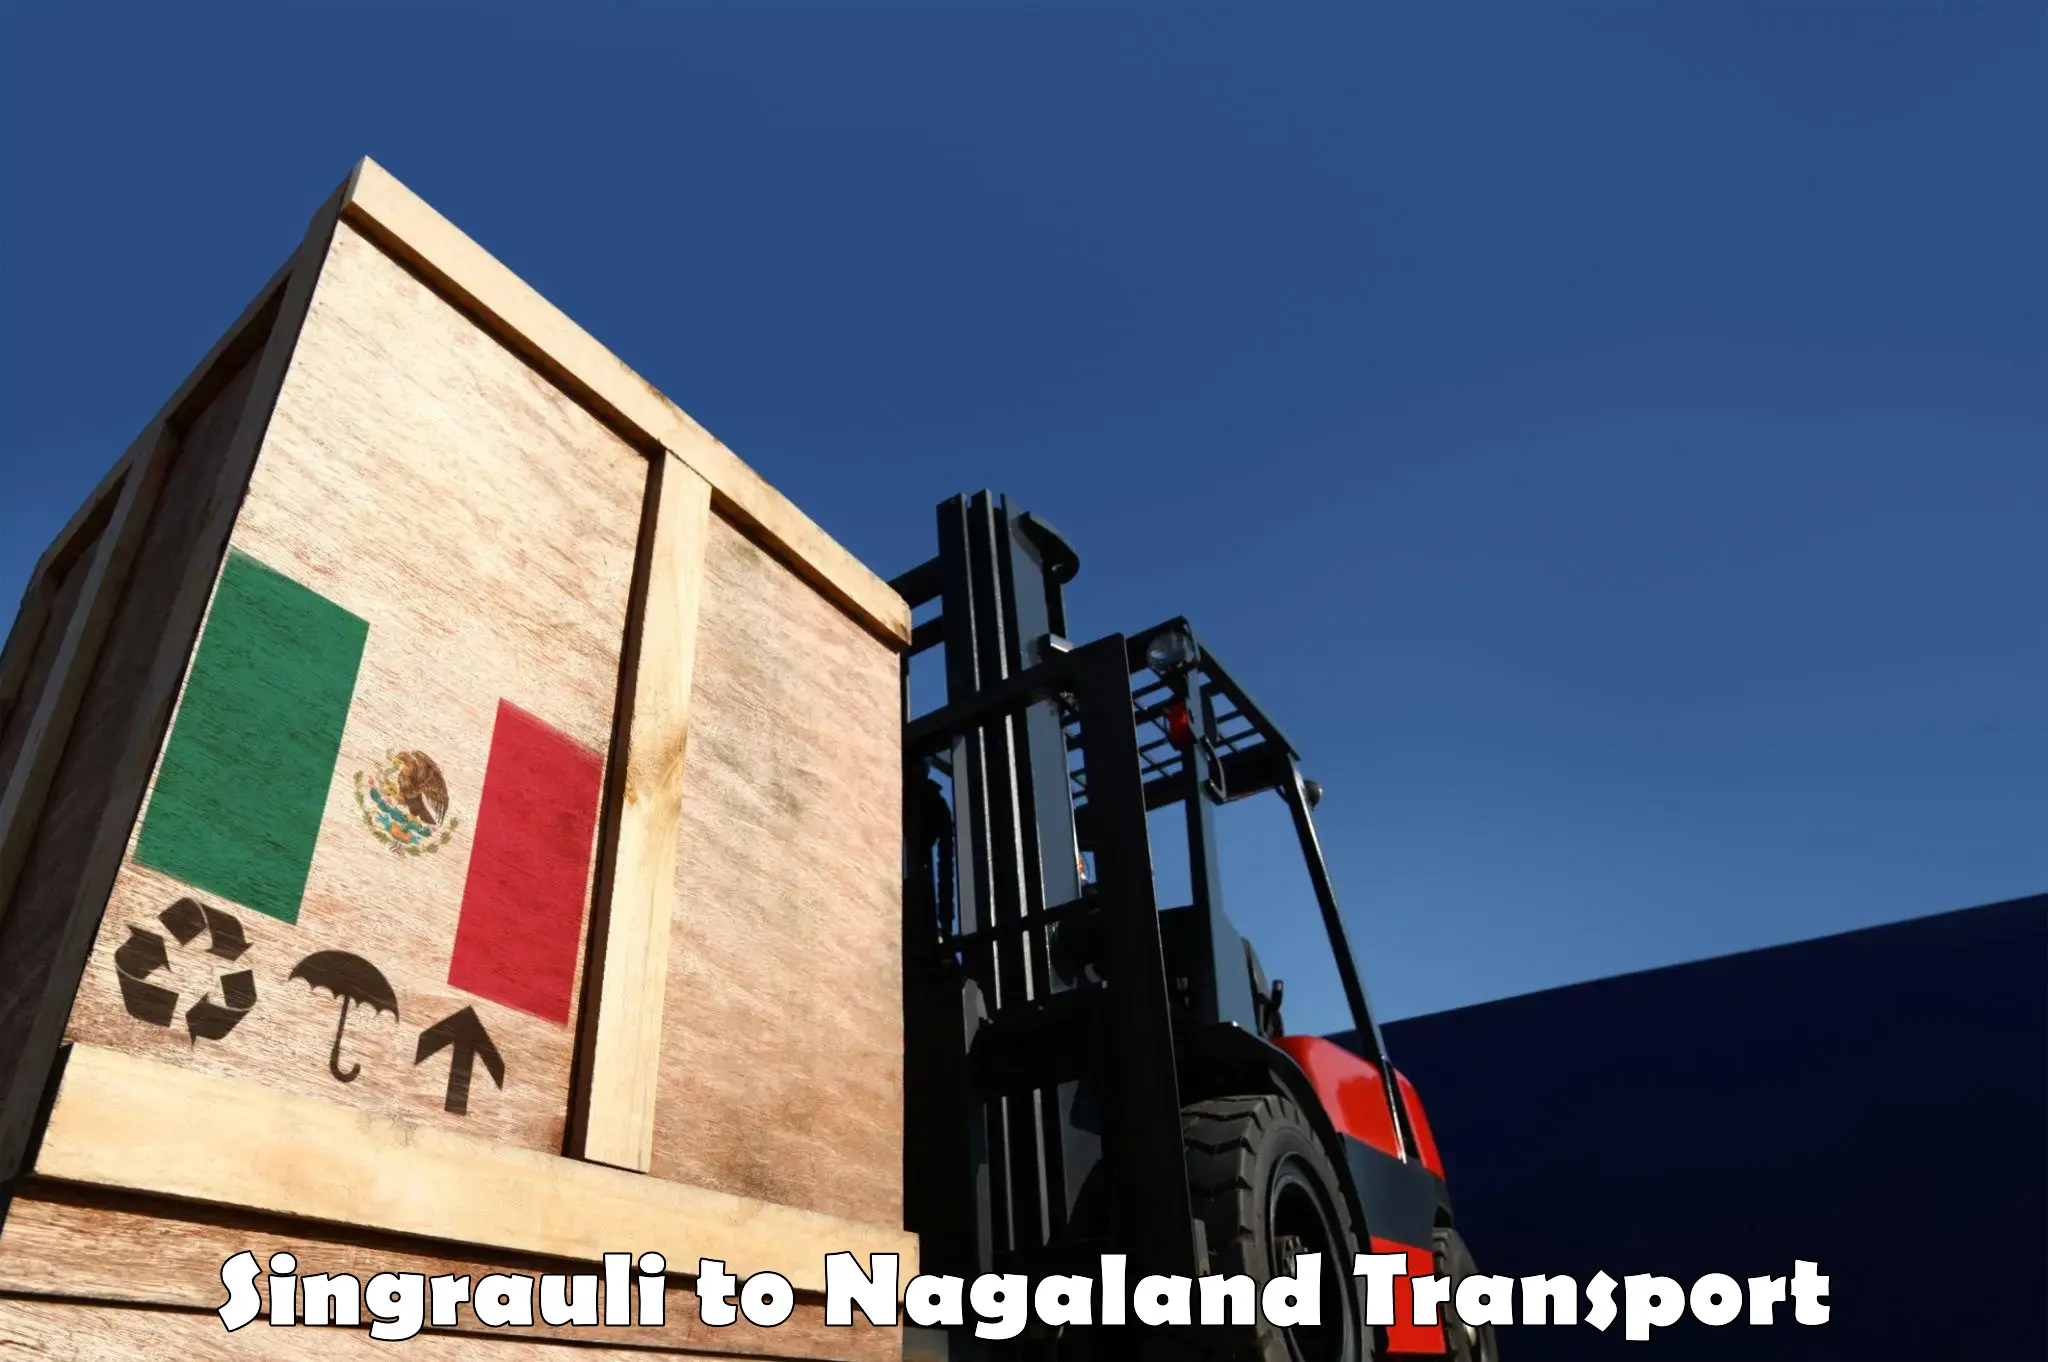 Container transport service Singrauli to Dimapur